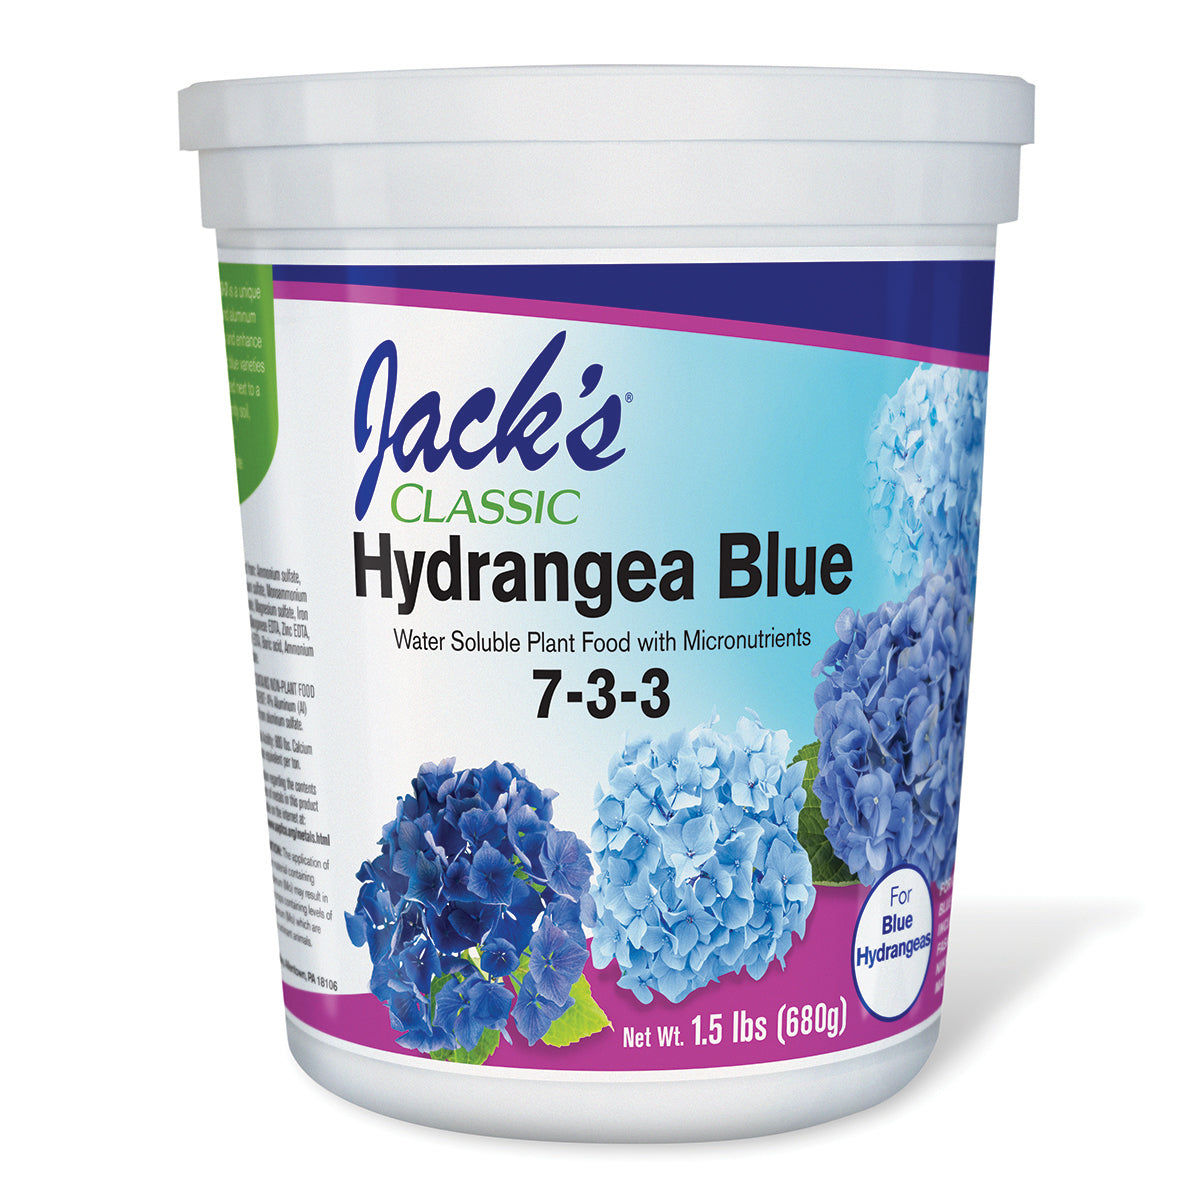 Product Image:Hortensia bleu classique Jack's  7-3-3 1,5 lb